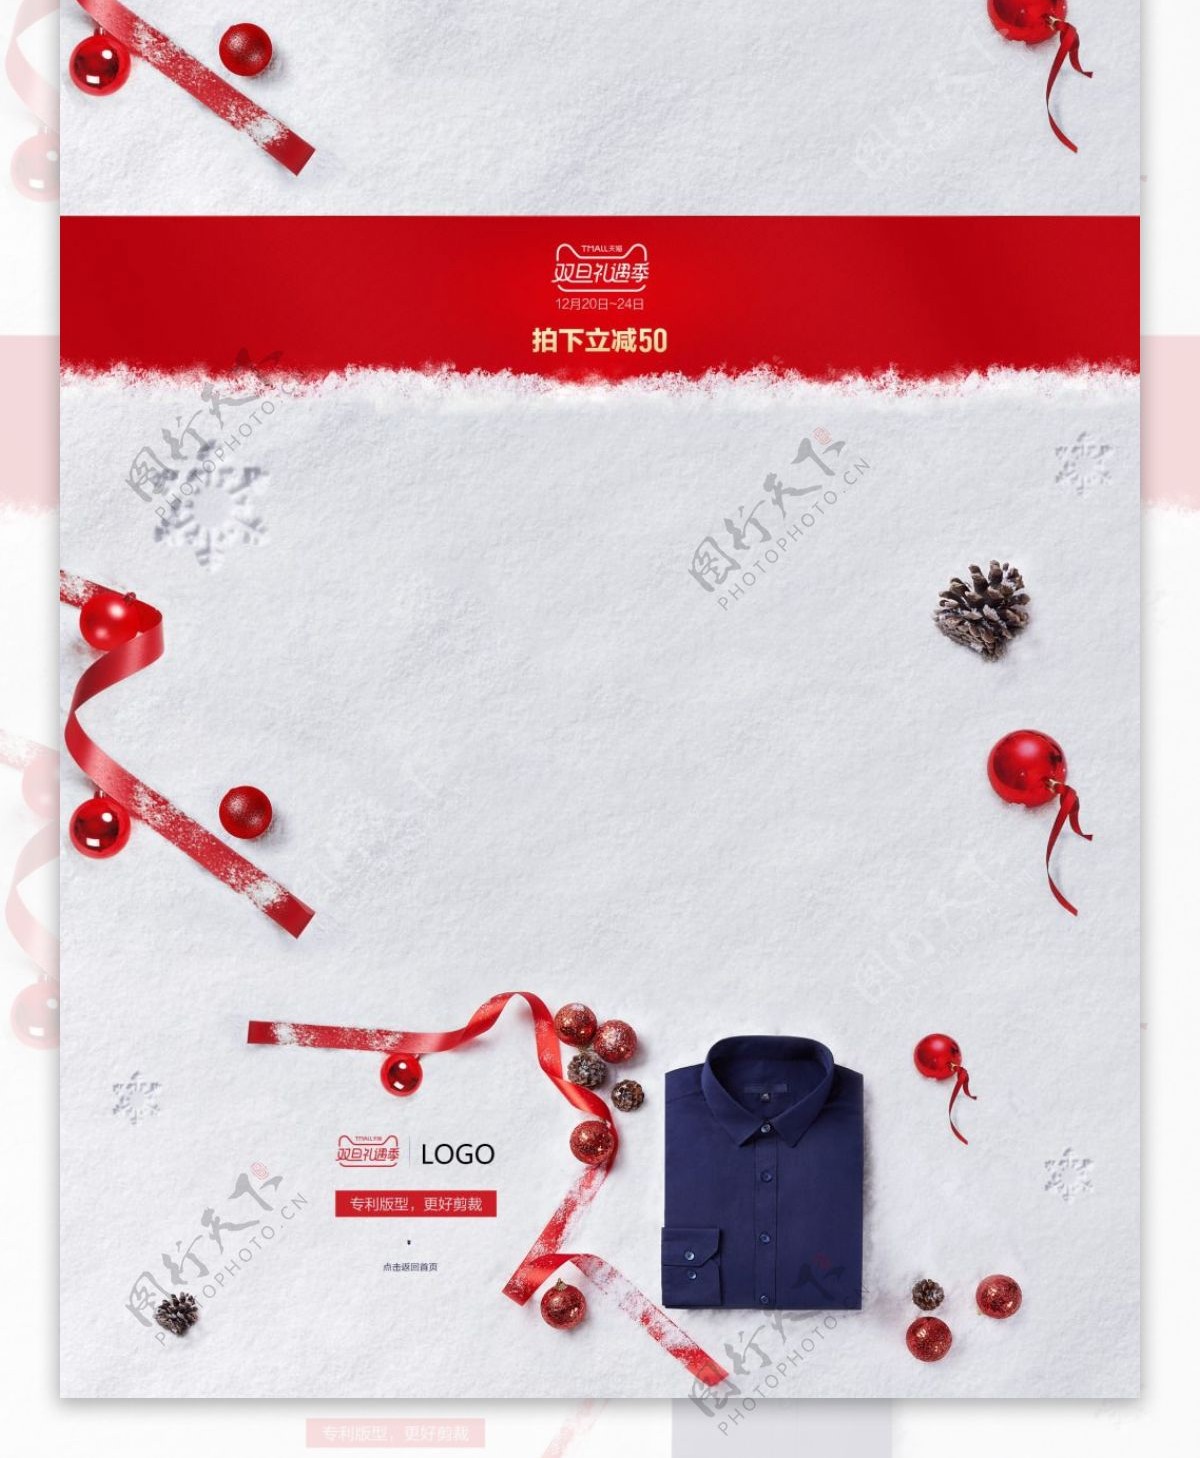 元旦圣诞特价首页banner海报设计